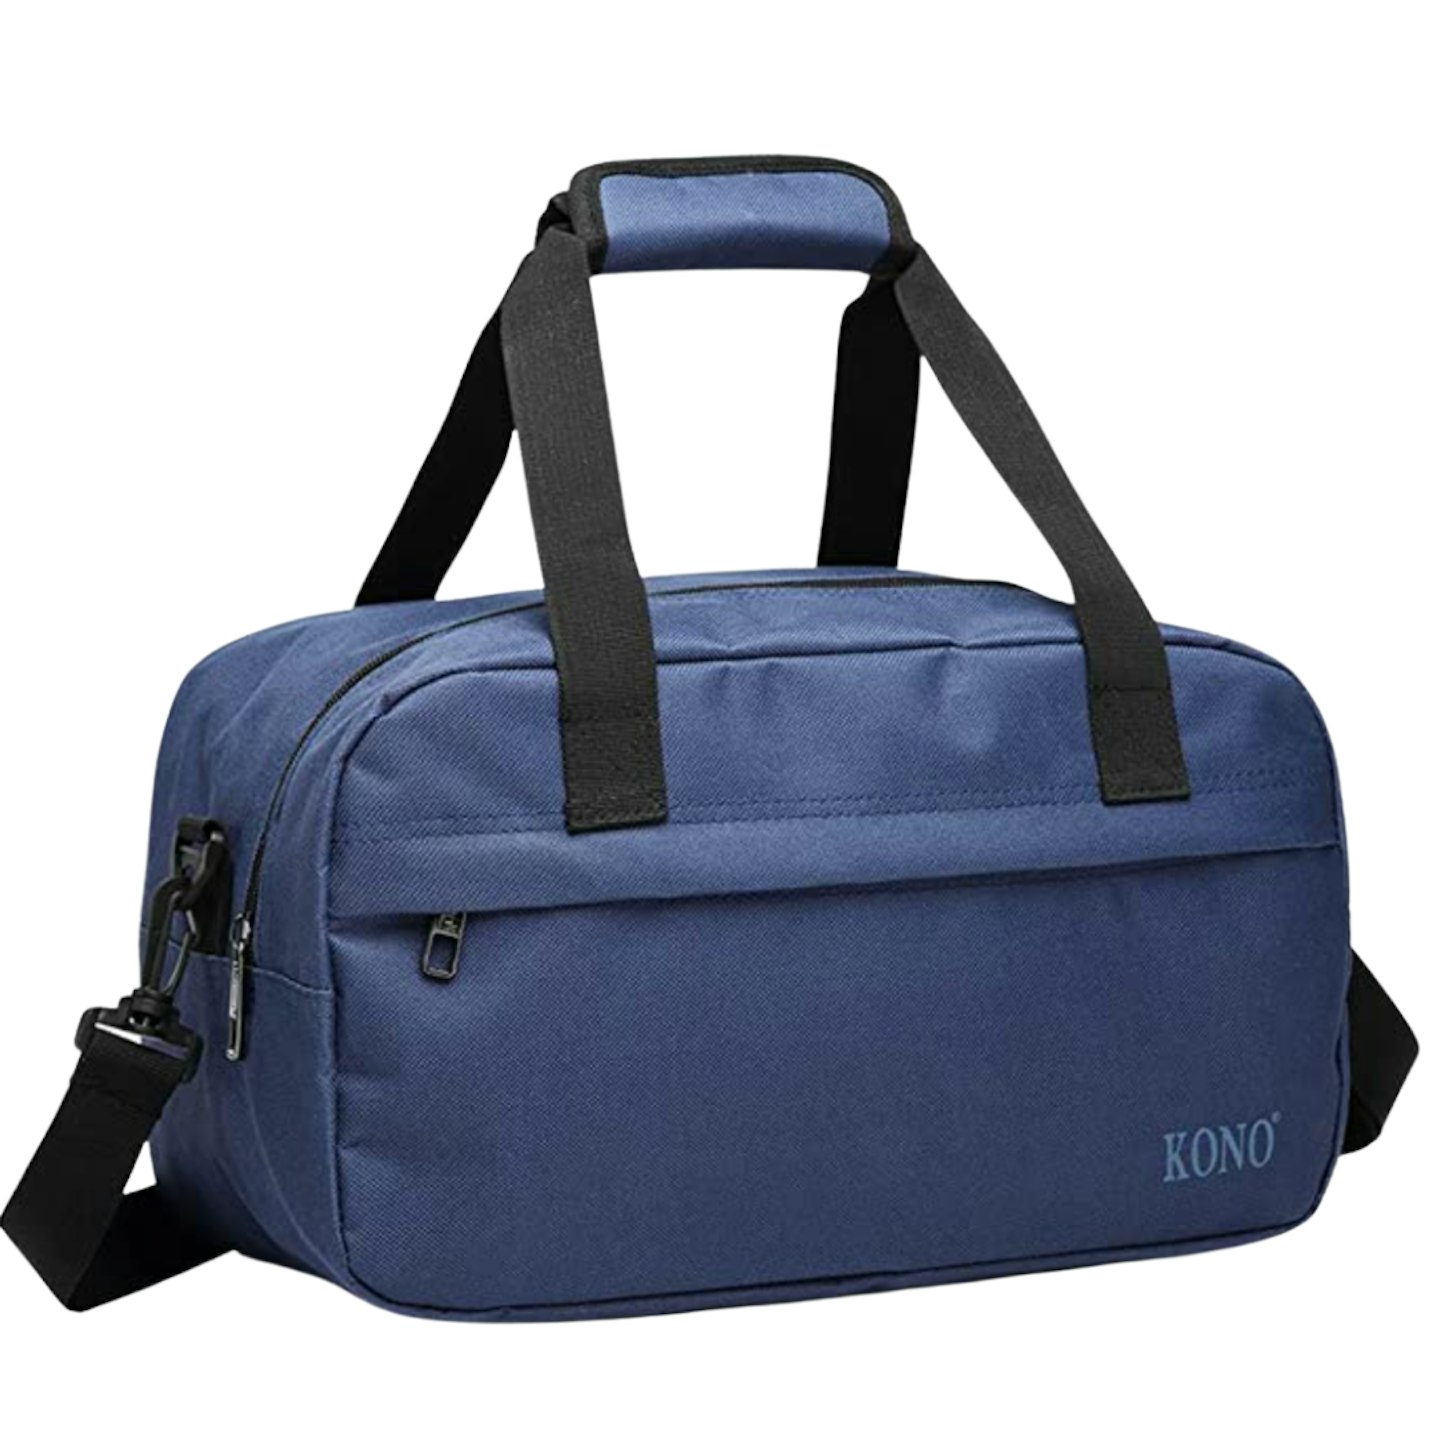 Kono Cabin Bag Under Seat Flight Bag Holdall Carry-on Luggage Travel Bag Unisex